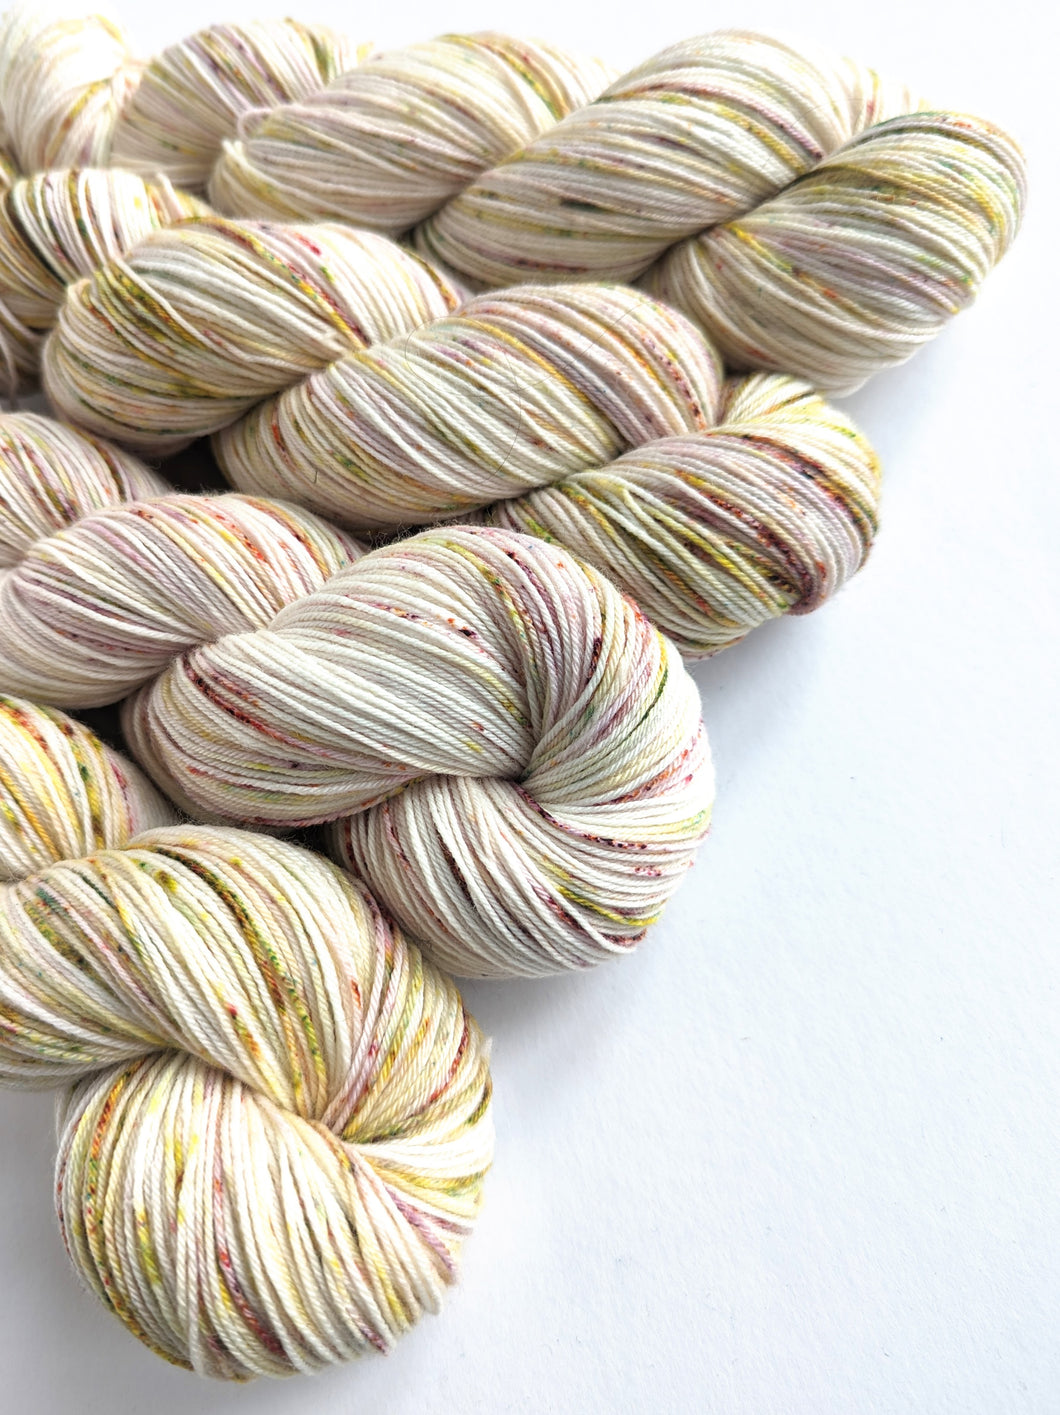 Autumn Speckles on superwash merino/nylon sock yarn.